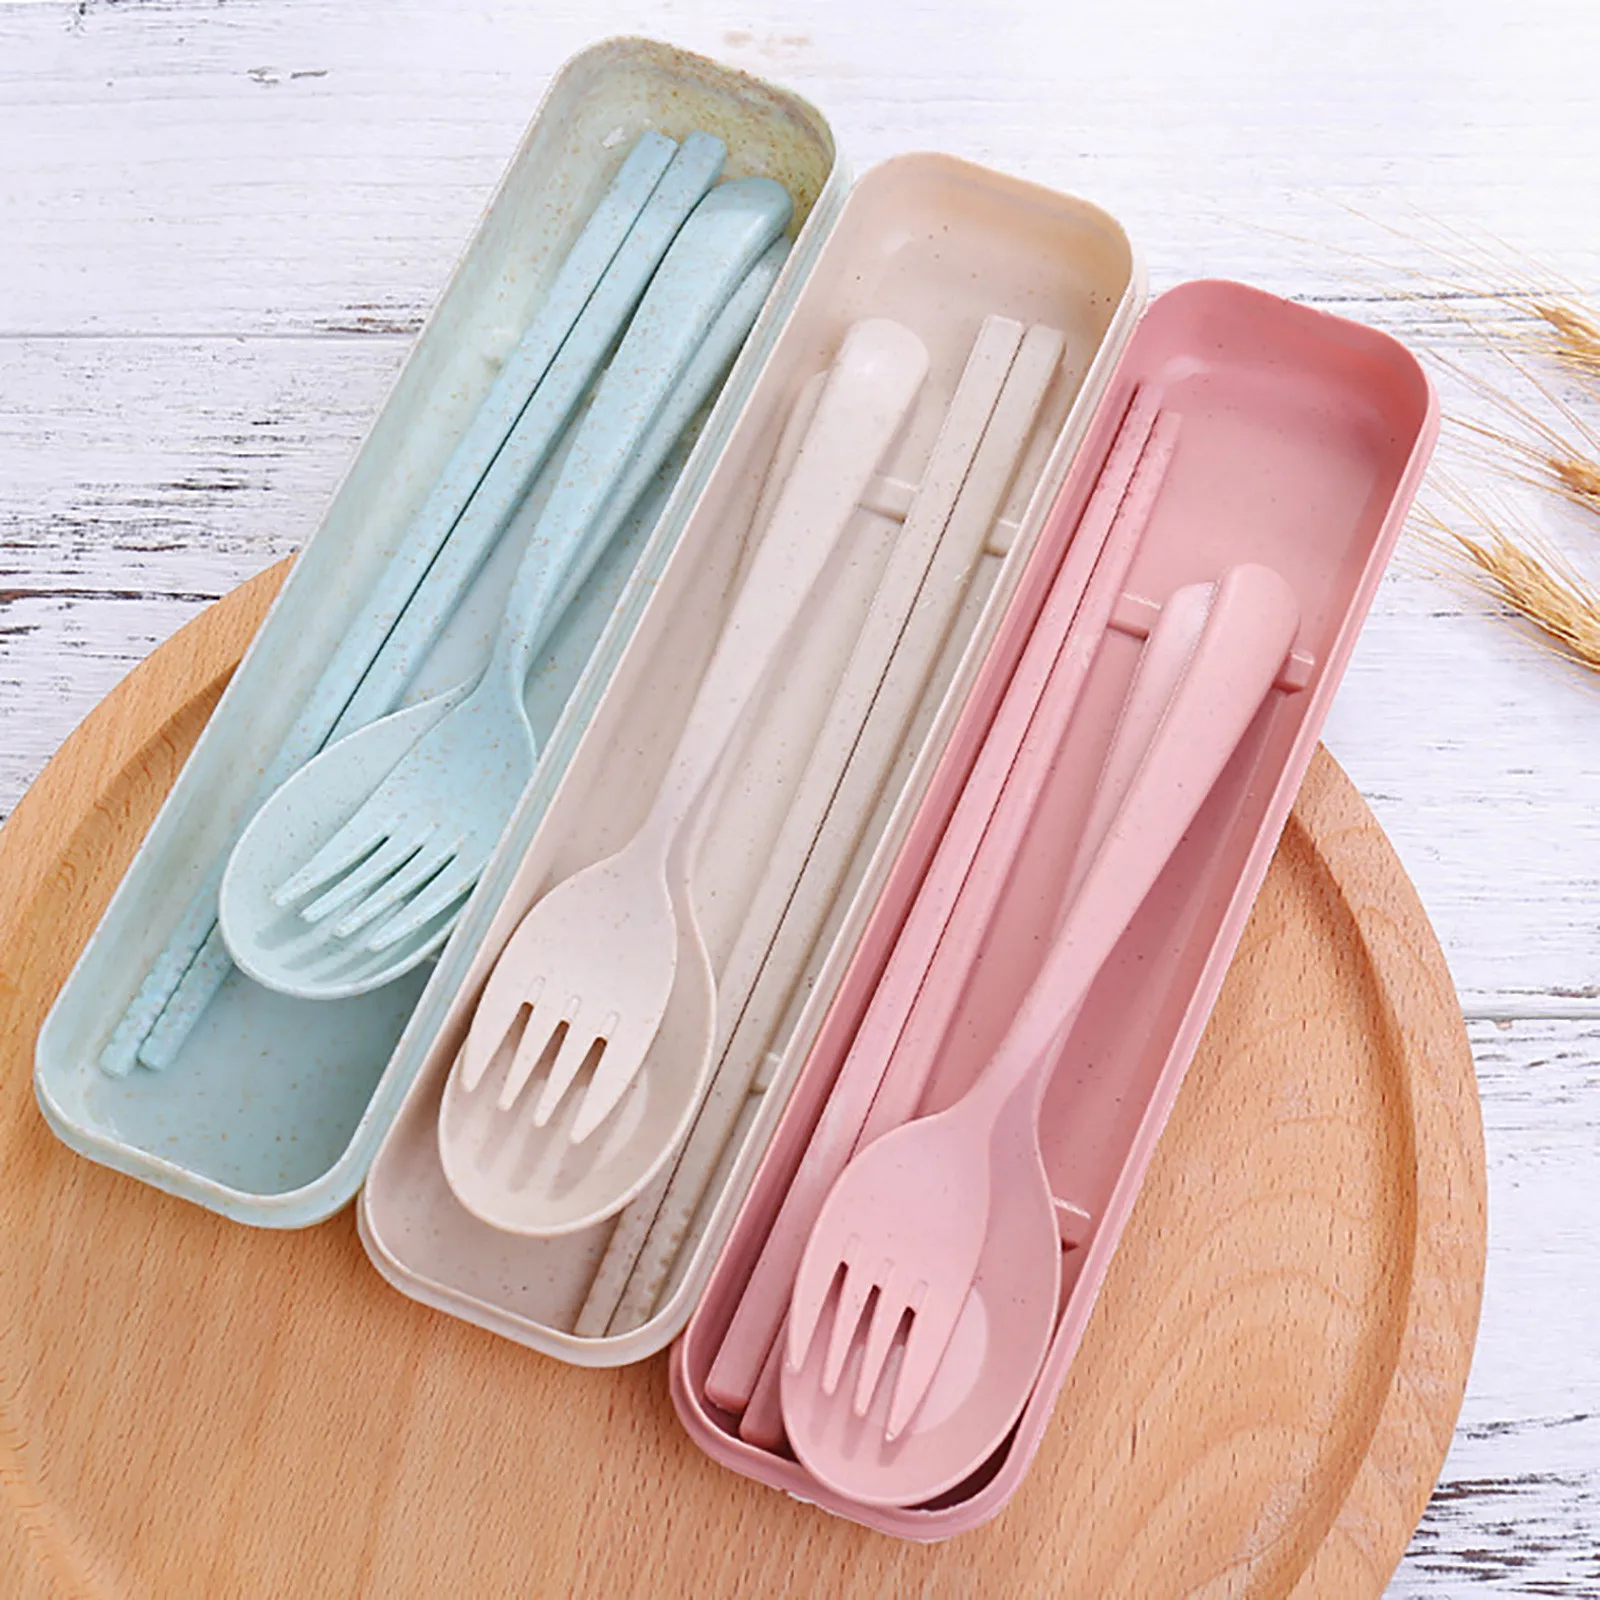 3 Pcs Portable Spoon Fork Chopsticks Reusable Wheat Straw Travel Tableware Set 